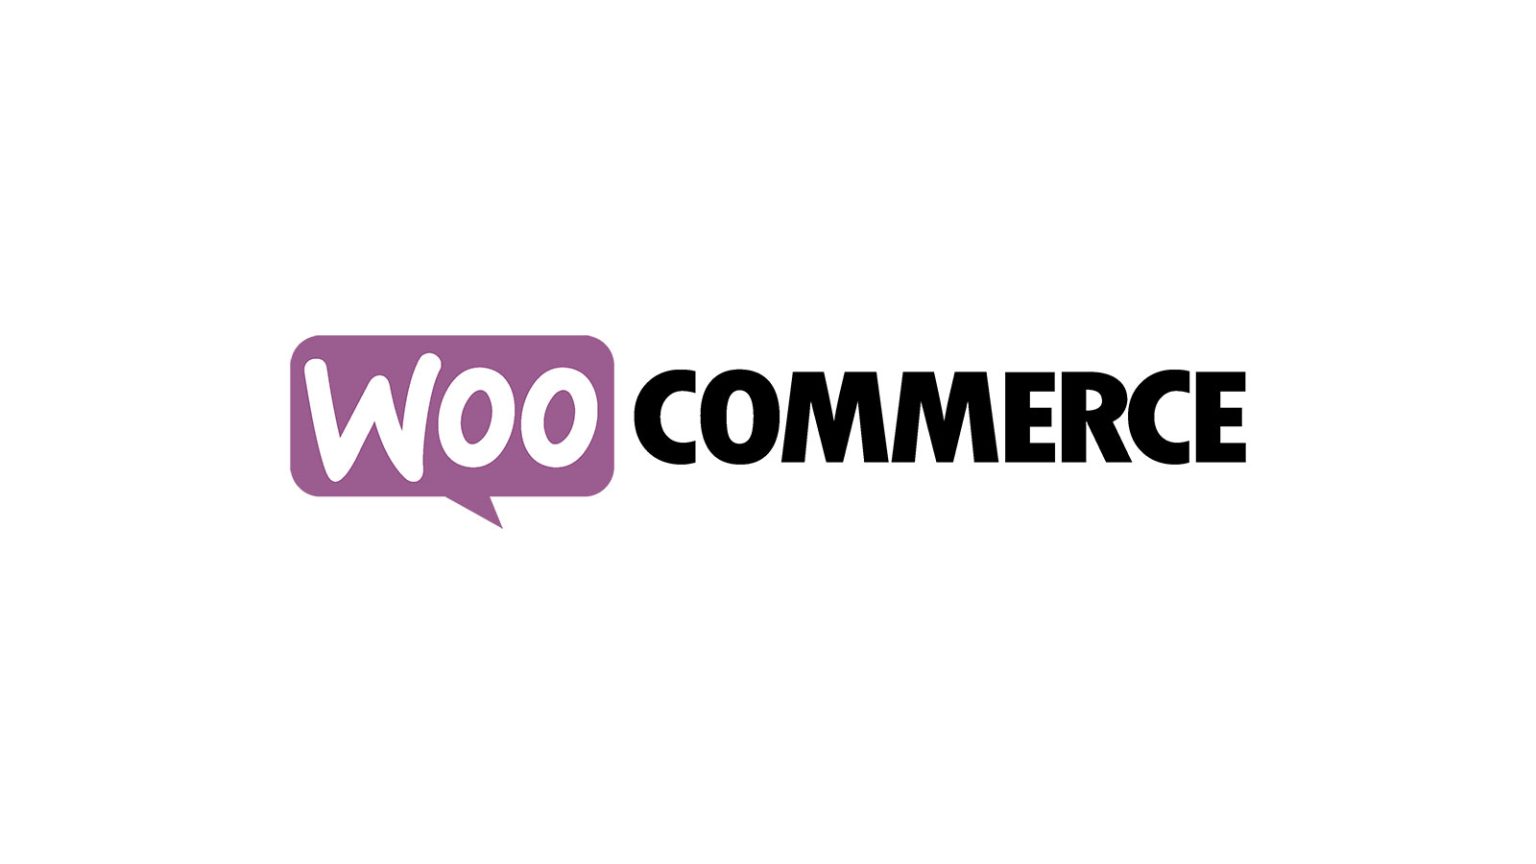 woocommerce logo 1536x864 - Benefits of using WooCommerce as an eCommerce platform